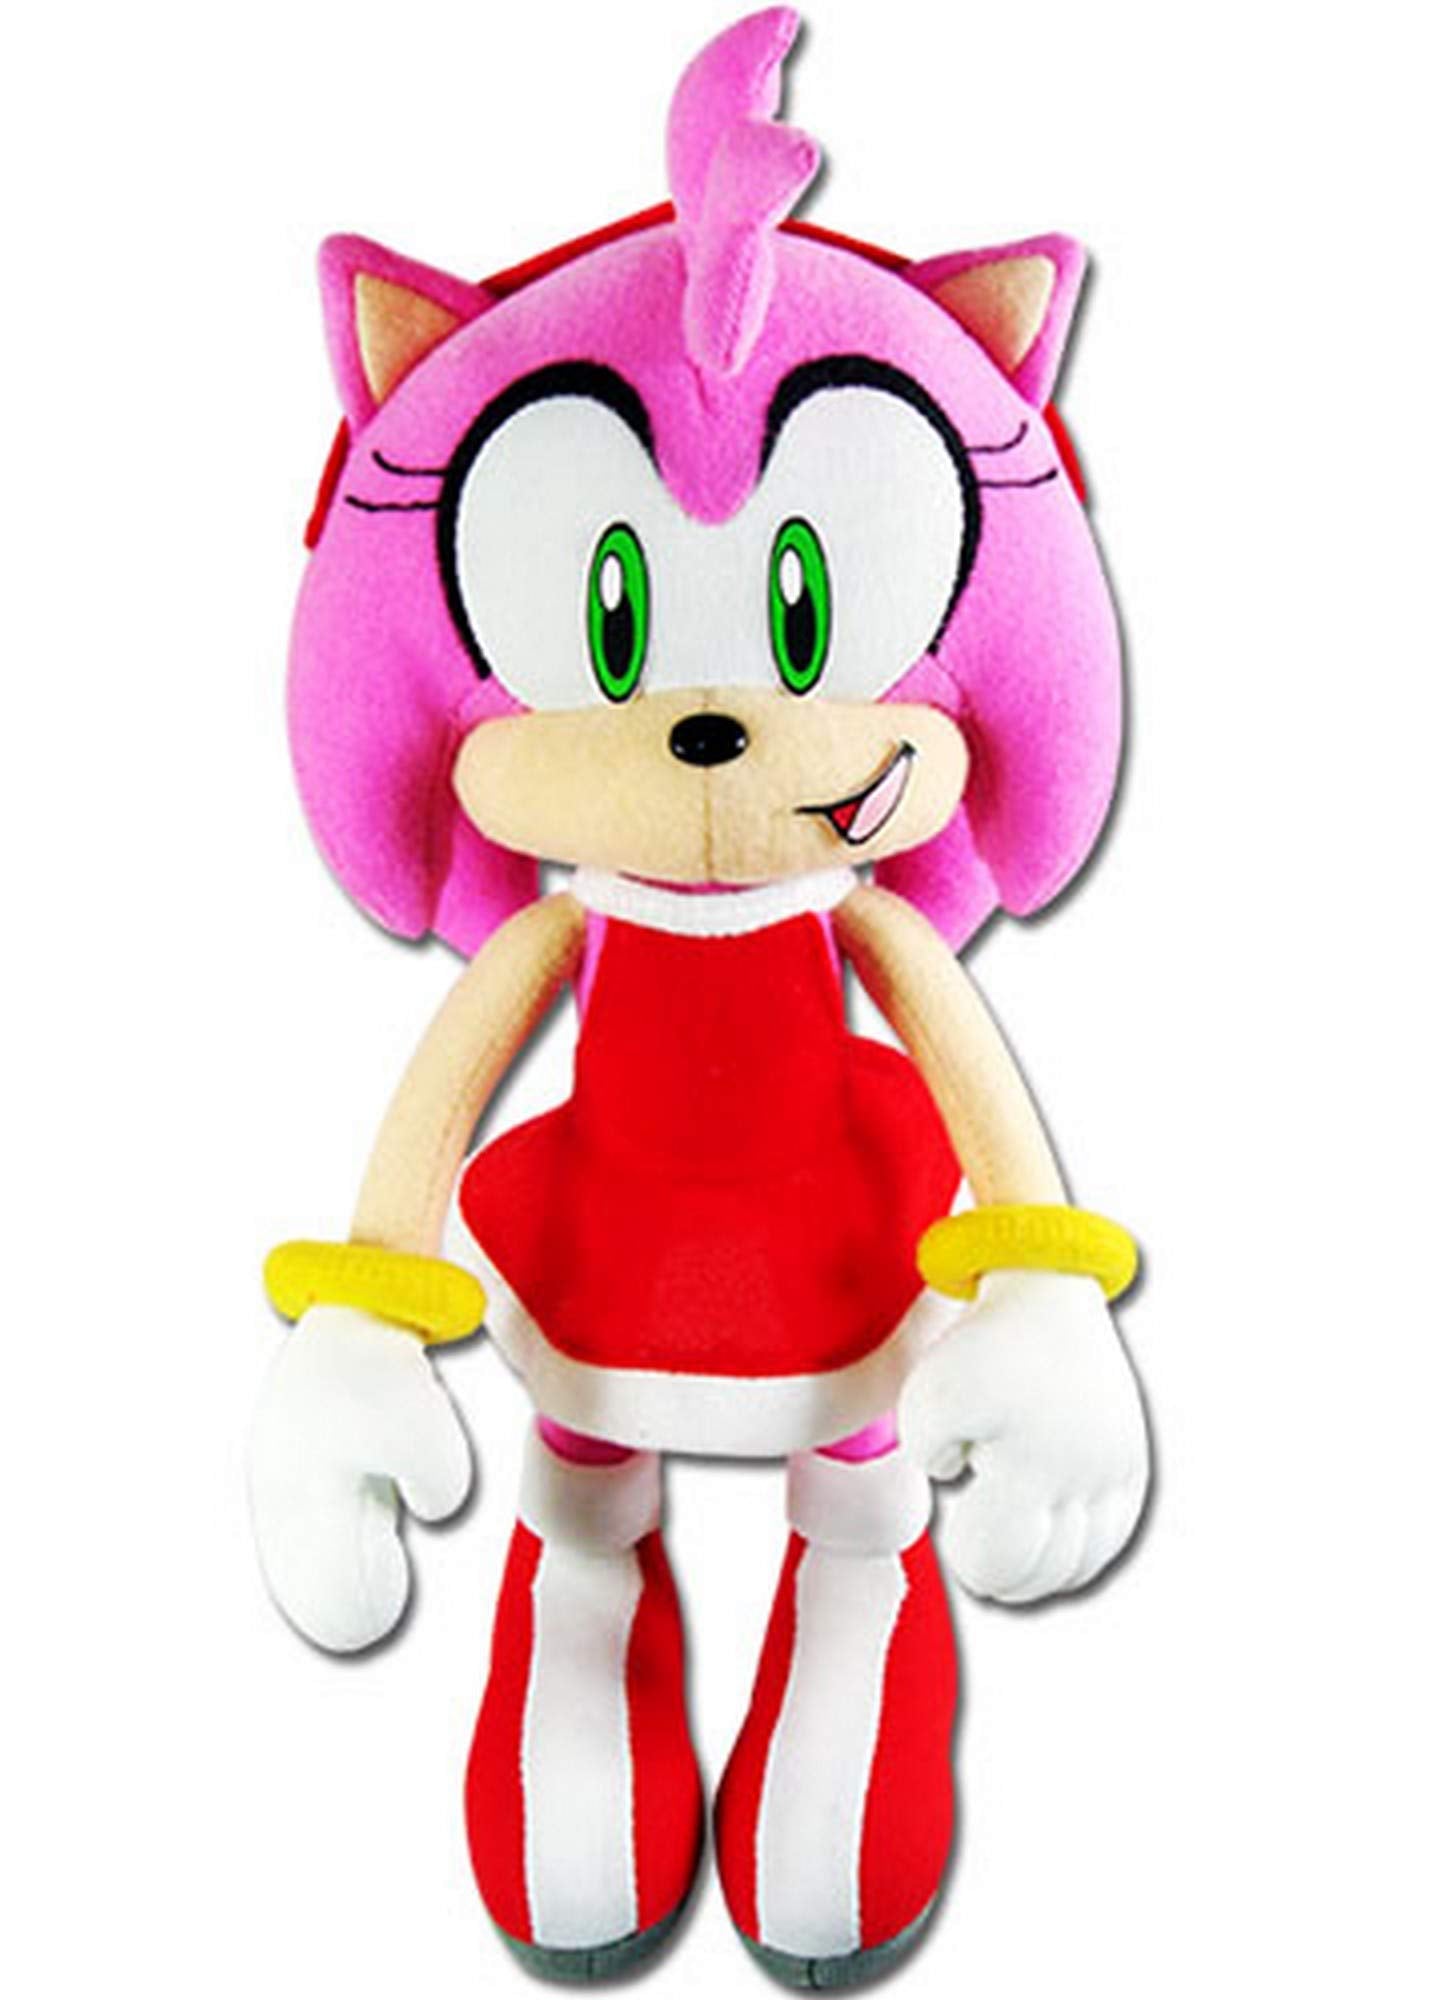 Sonic The Hedgehog Great Eastern GE-8958 Plush - Super Sonic, 12